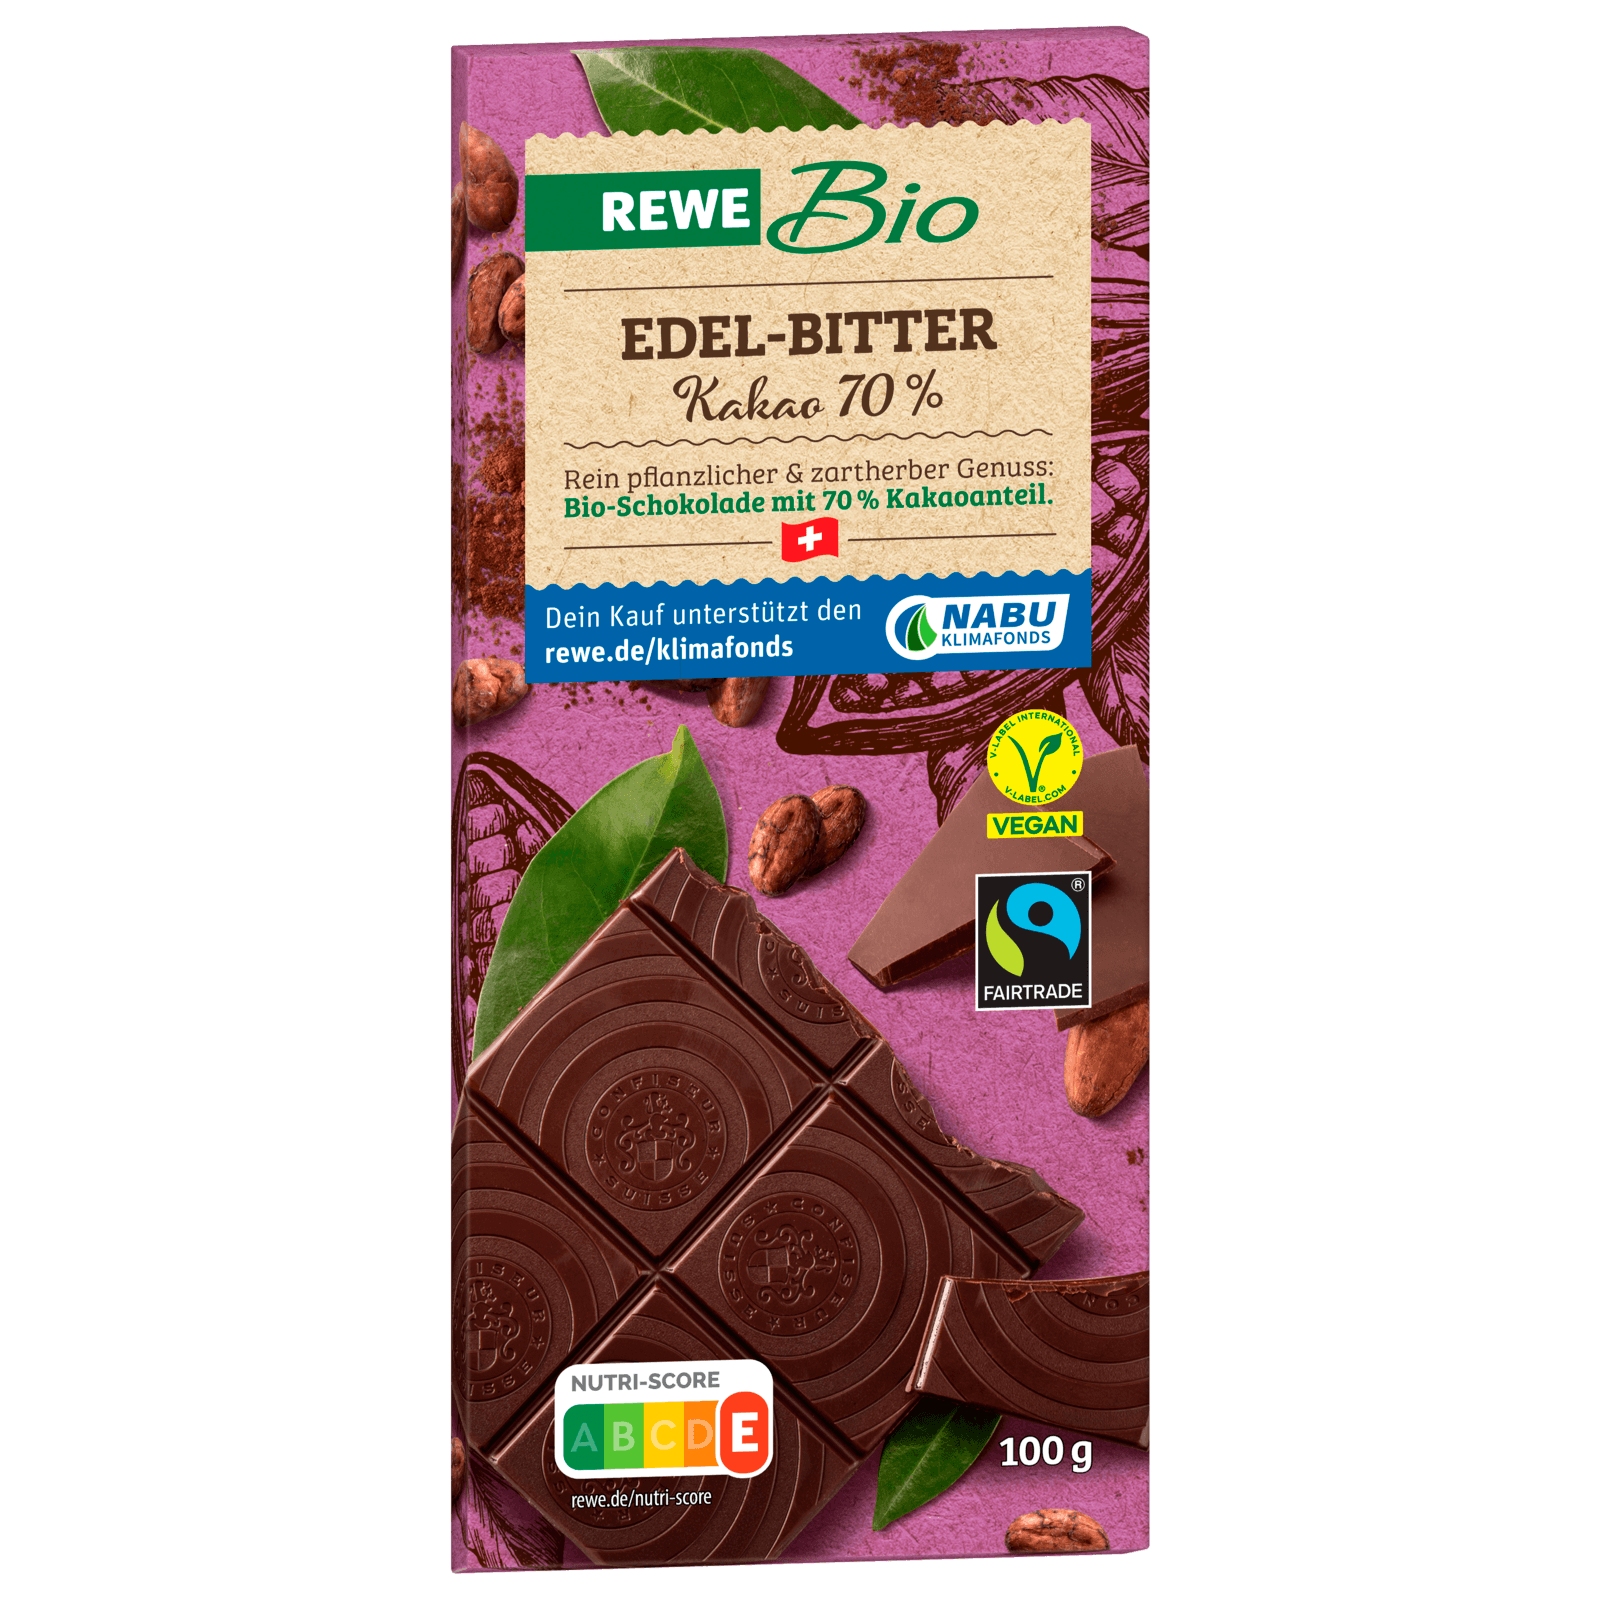 REWE Bio Edel-Bitter Schokolade 100g